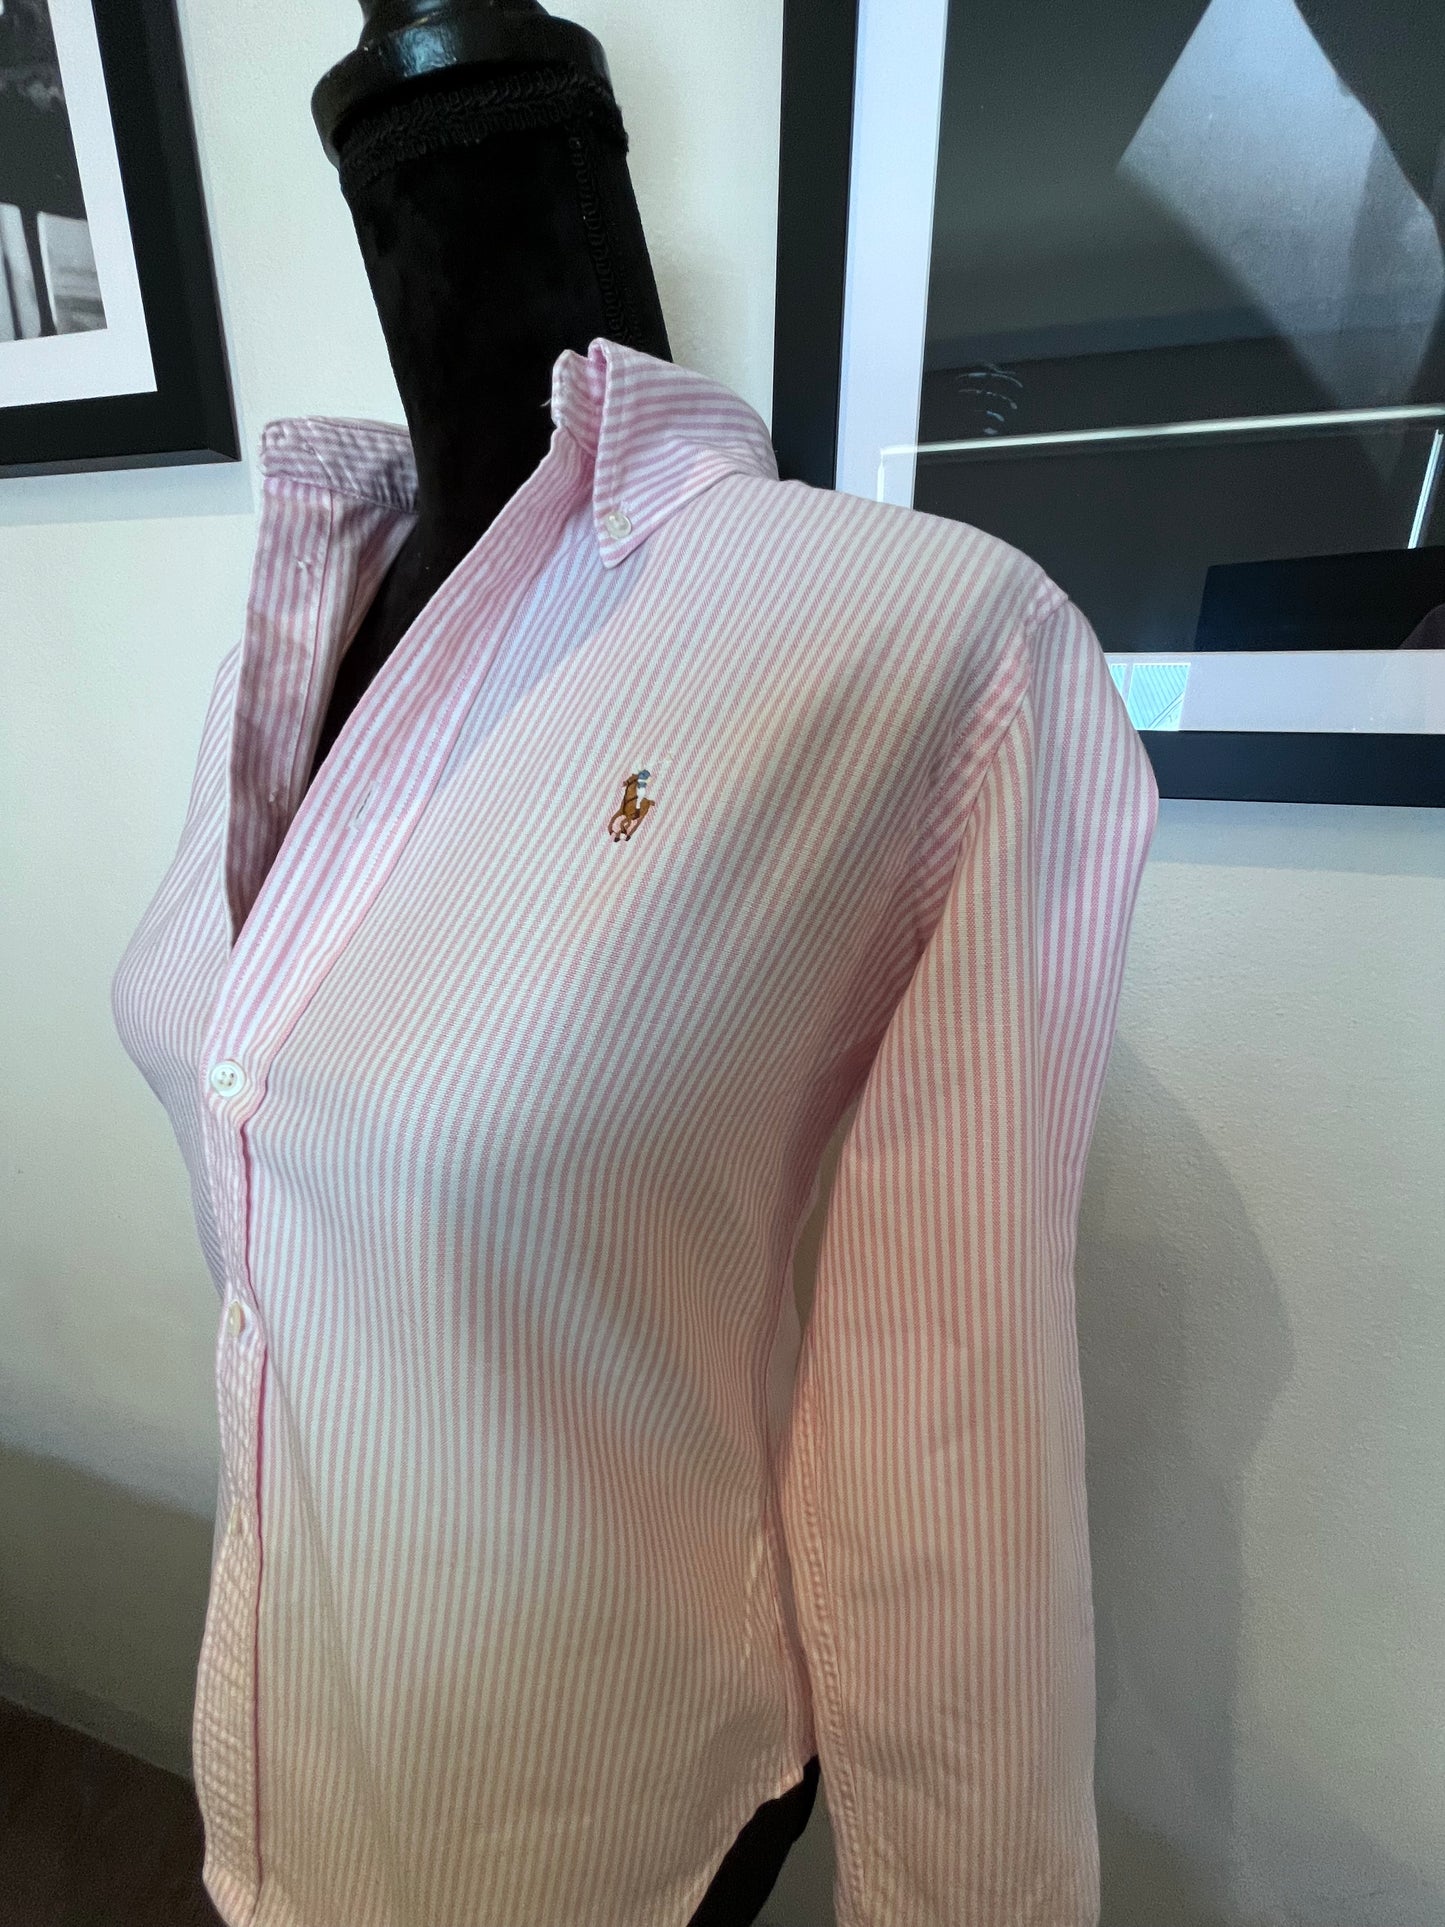 Ralph Lauren Women’s 100% Cotton Pink White Stripe Shirt Slim Fit Size 8